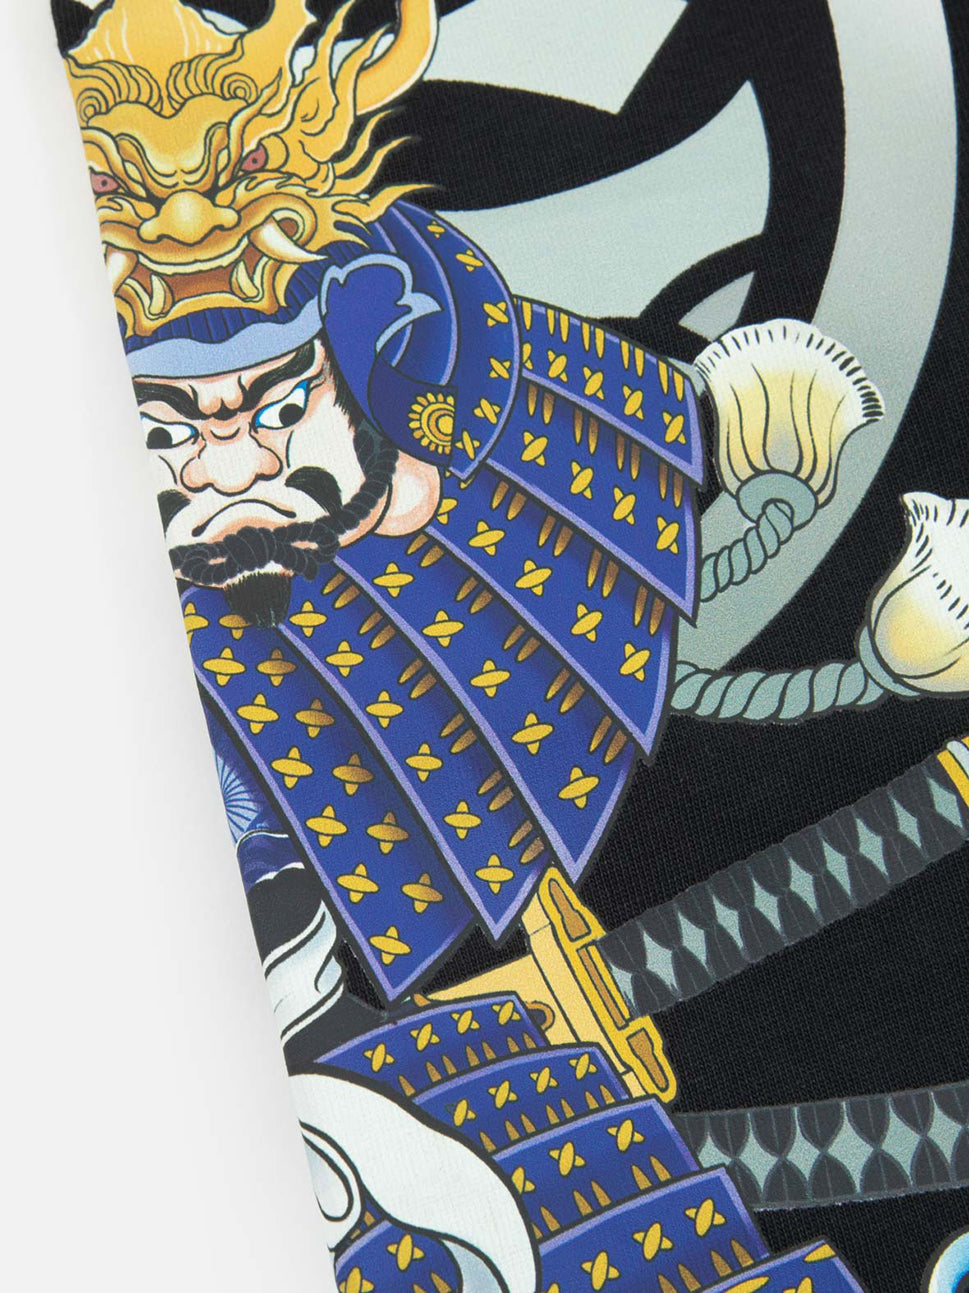 Evisu Black Printed Samurai & Seagull Embroidery Tee